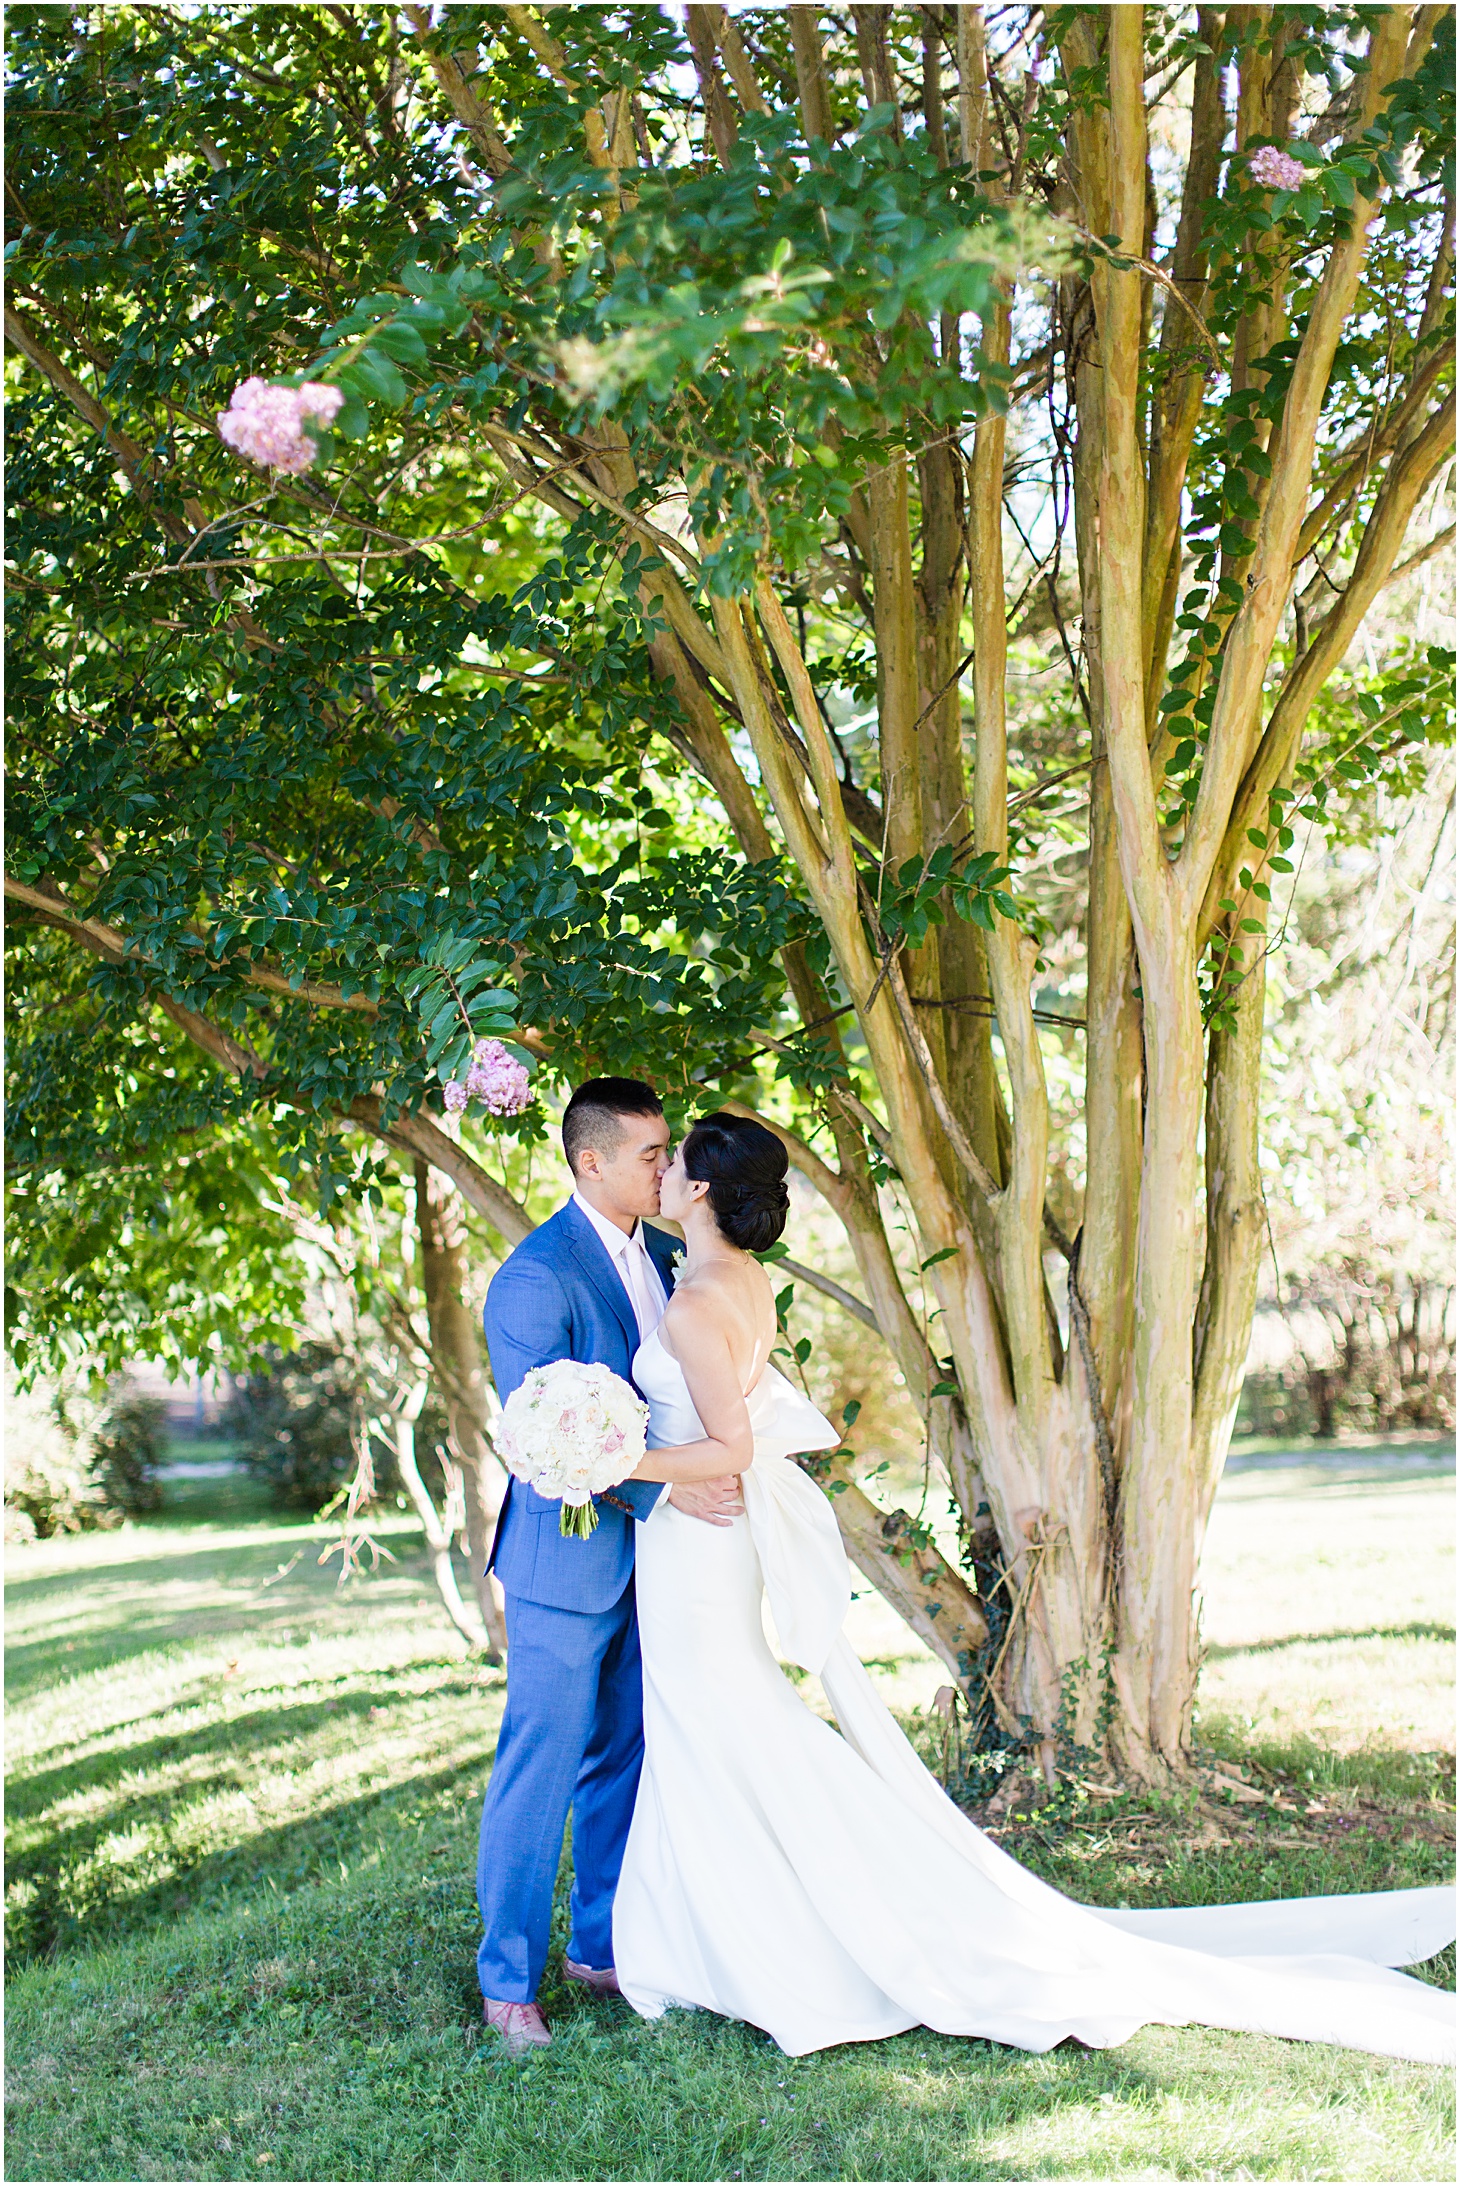 Raspberry Plain Manor | Top Washington DC wedding photographer Sarah Bradshaw